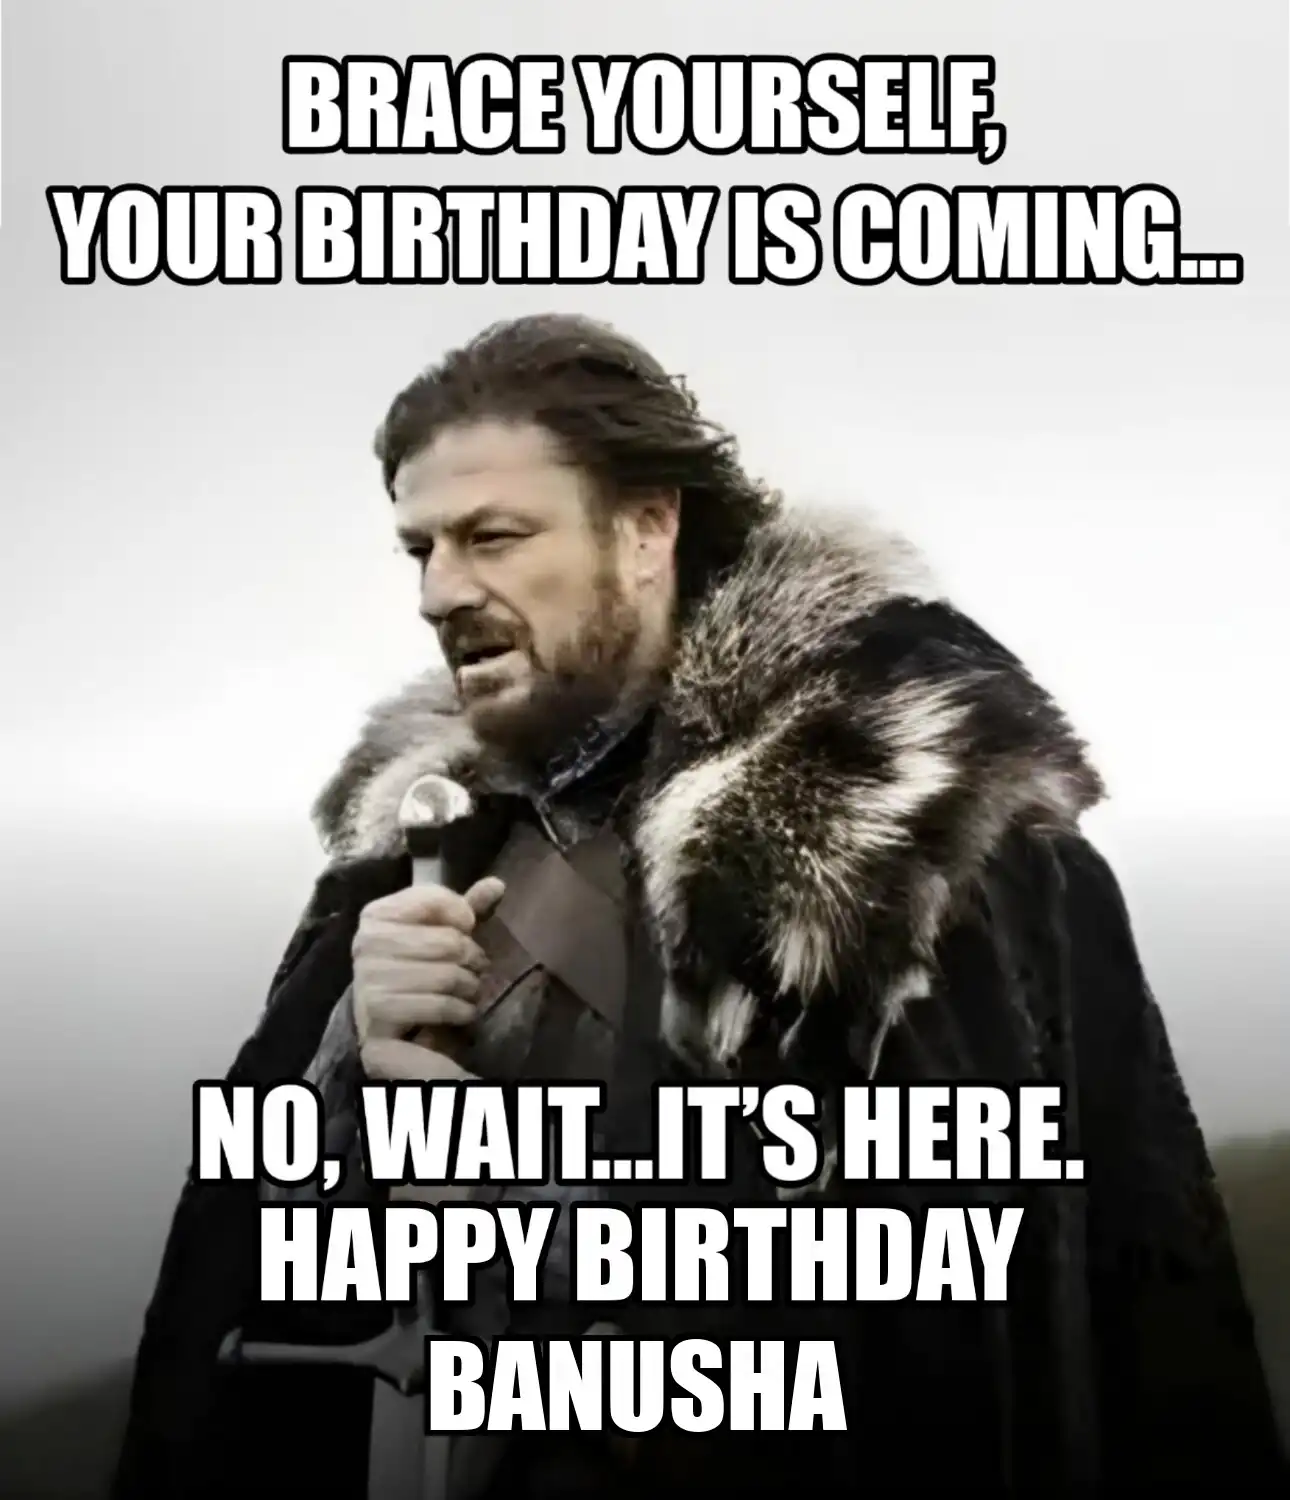 Happy Birthday Banusha Brace Yourself Your Birthday Is Coming Meme